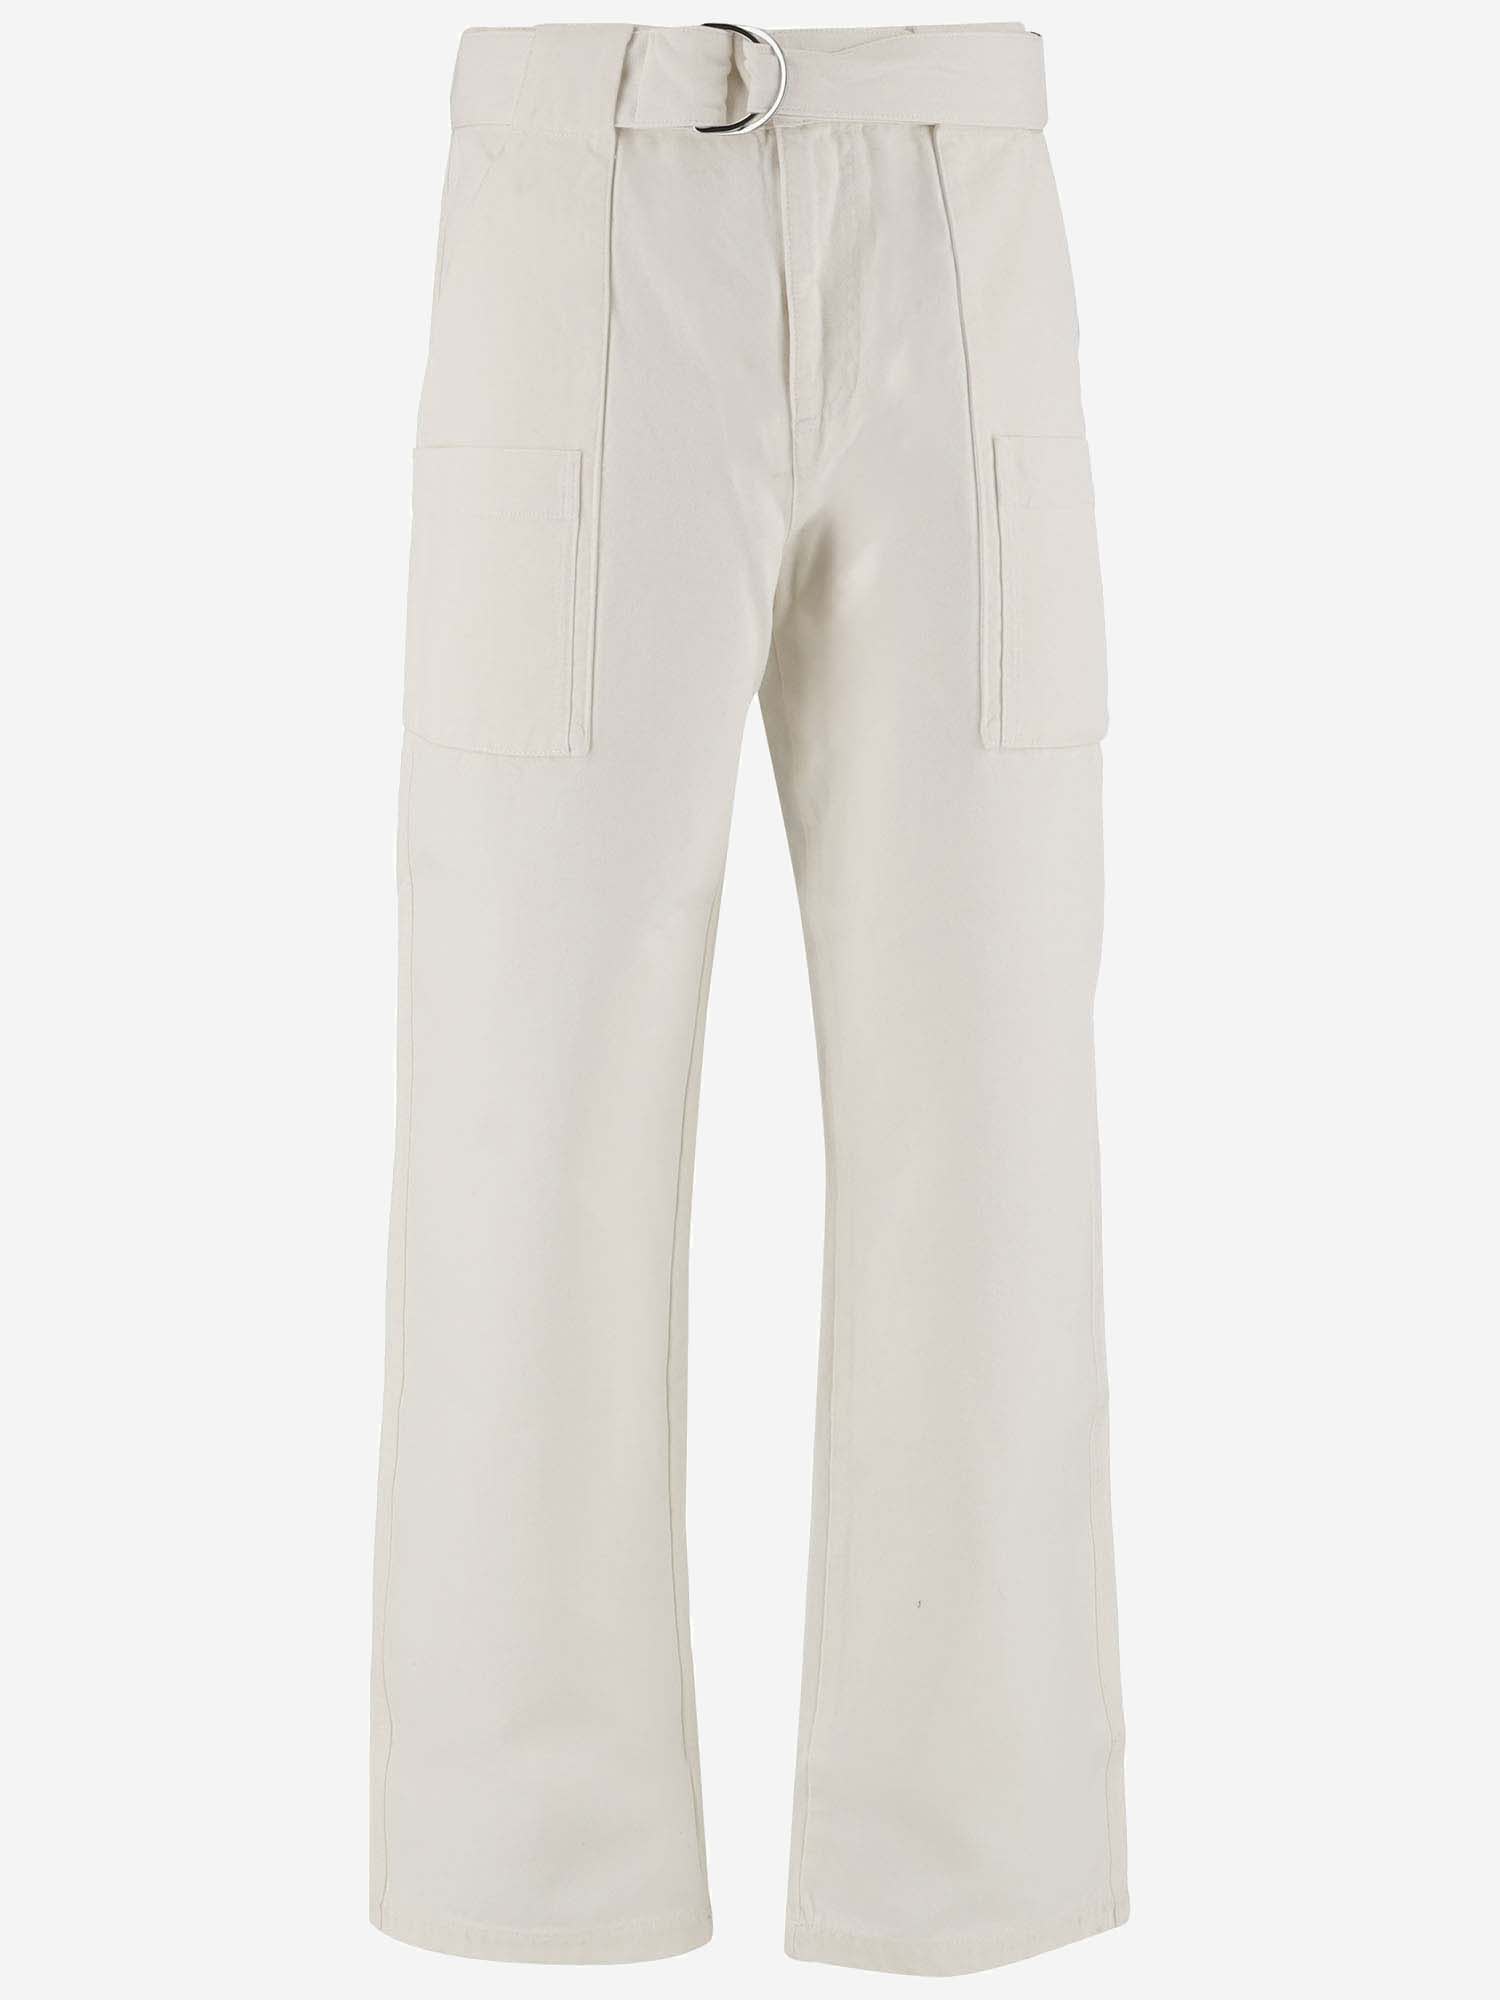 J.W. Anderson Cotton Pants With Belt